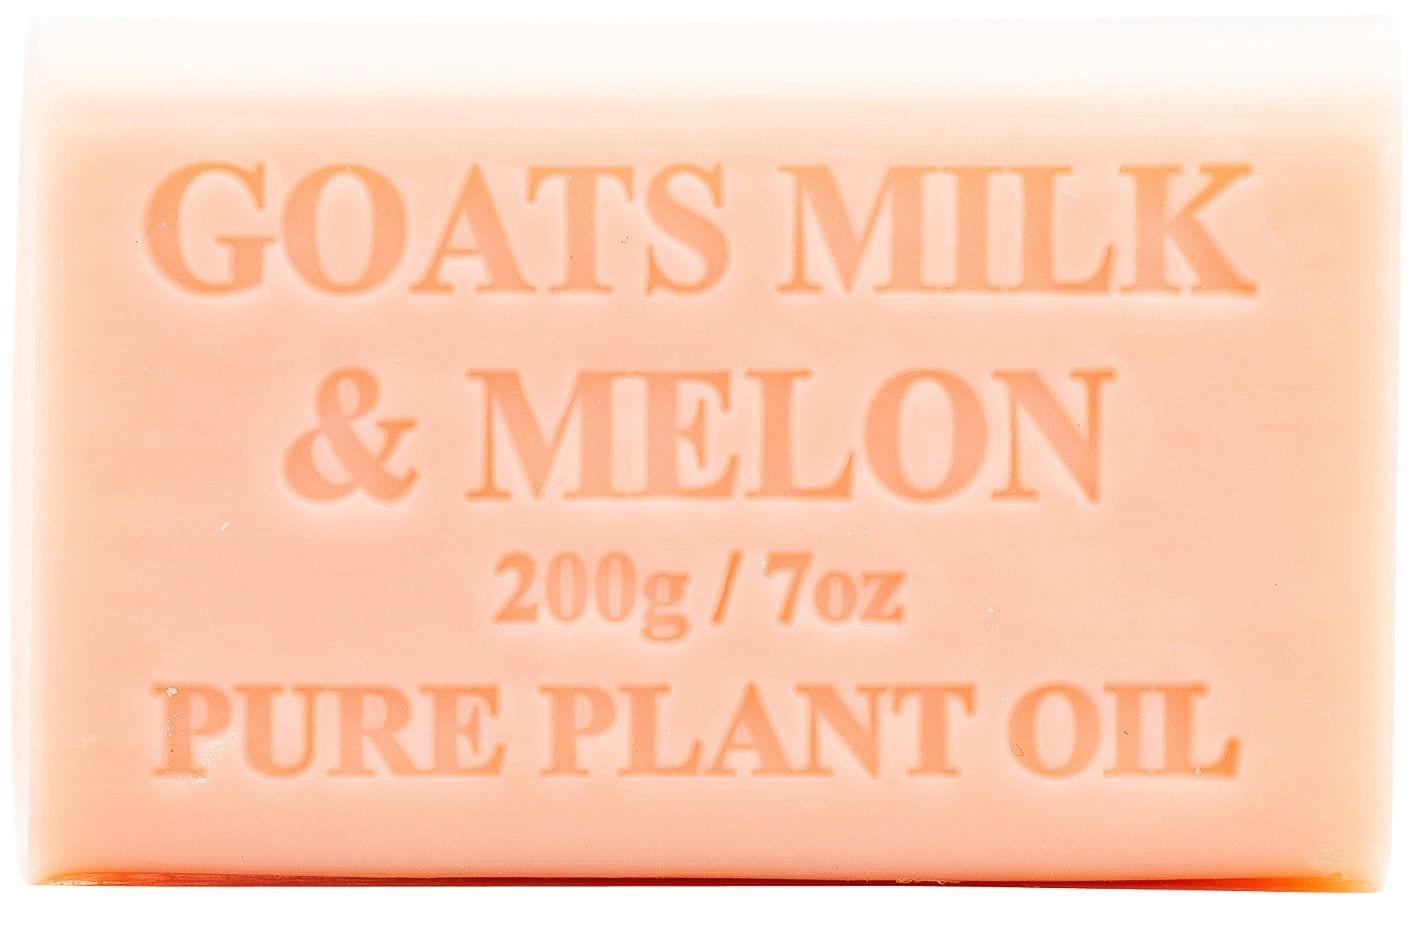 Goats milk and melon soap